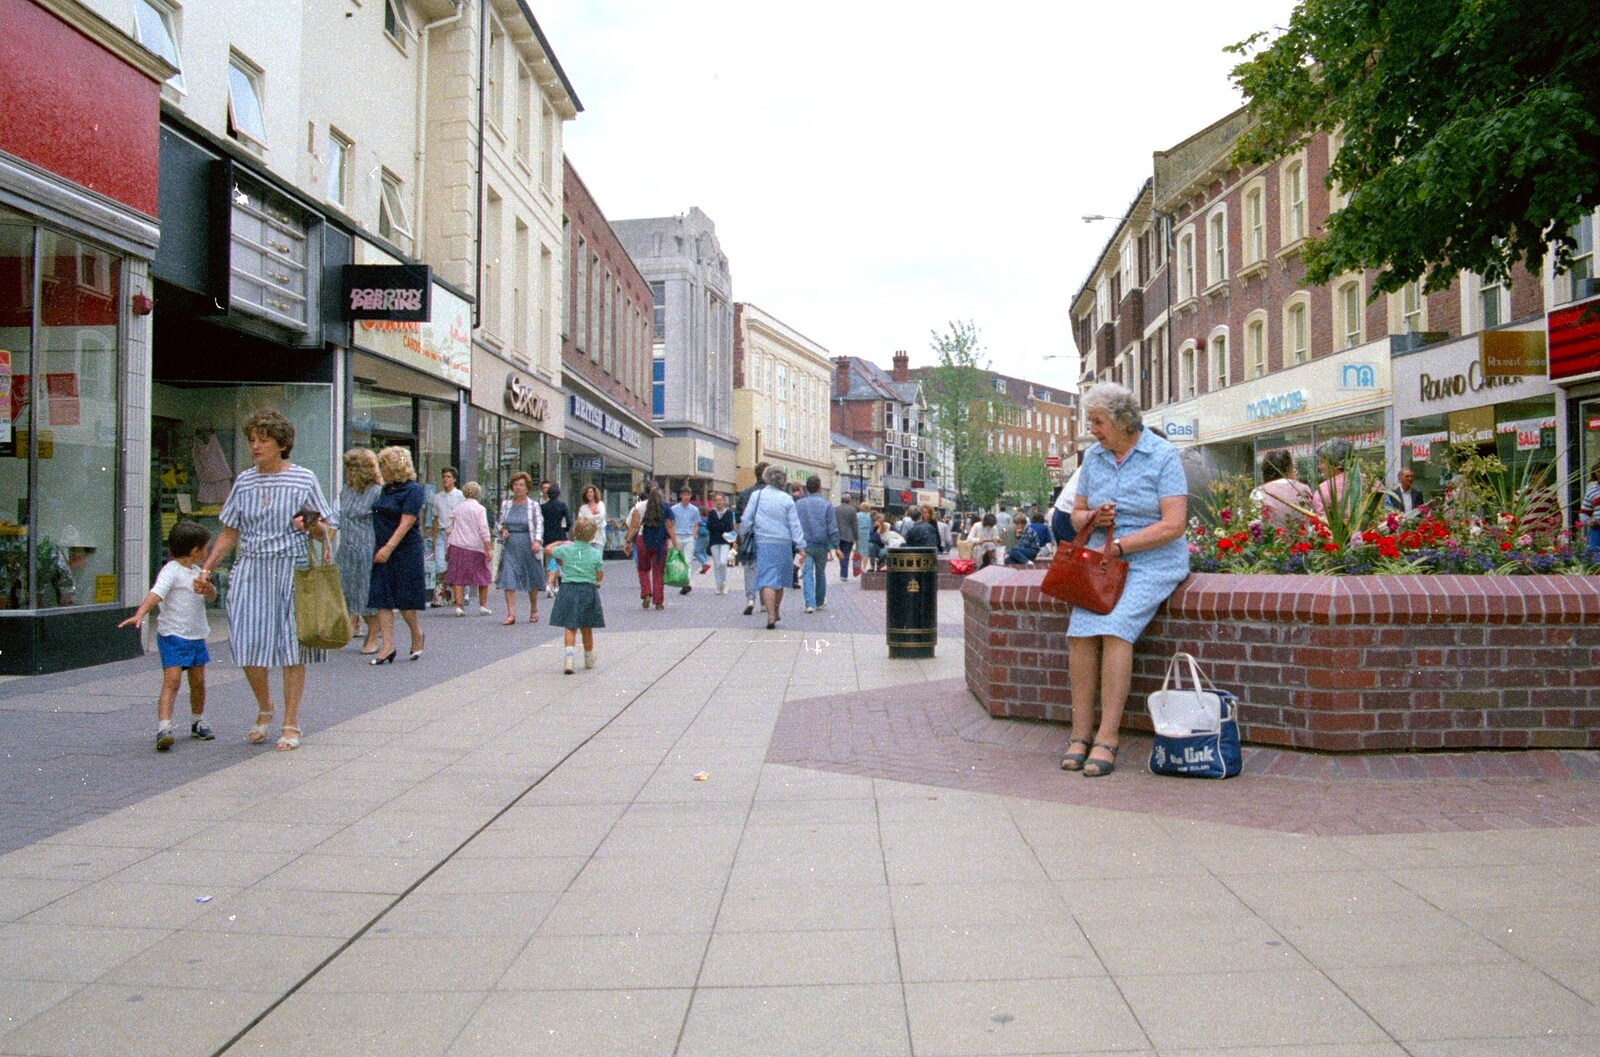 Tunbridge Wells High Street from A Trip to Groombridge, Kent - 10th July 1986